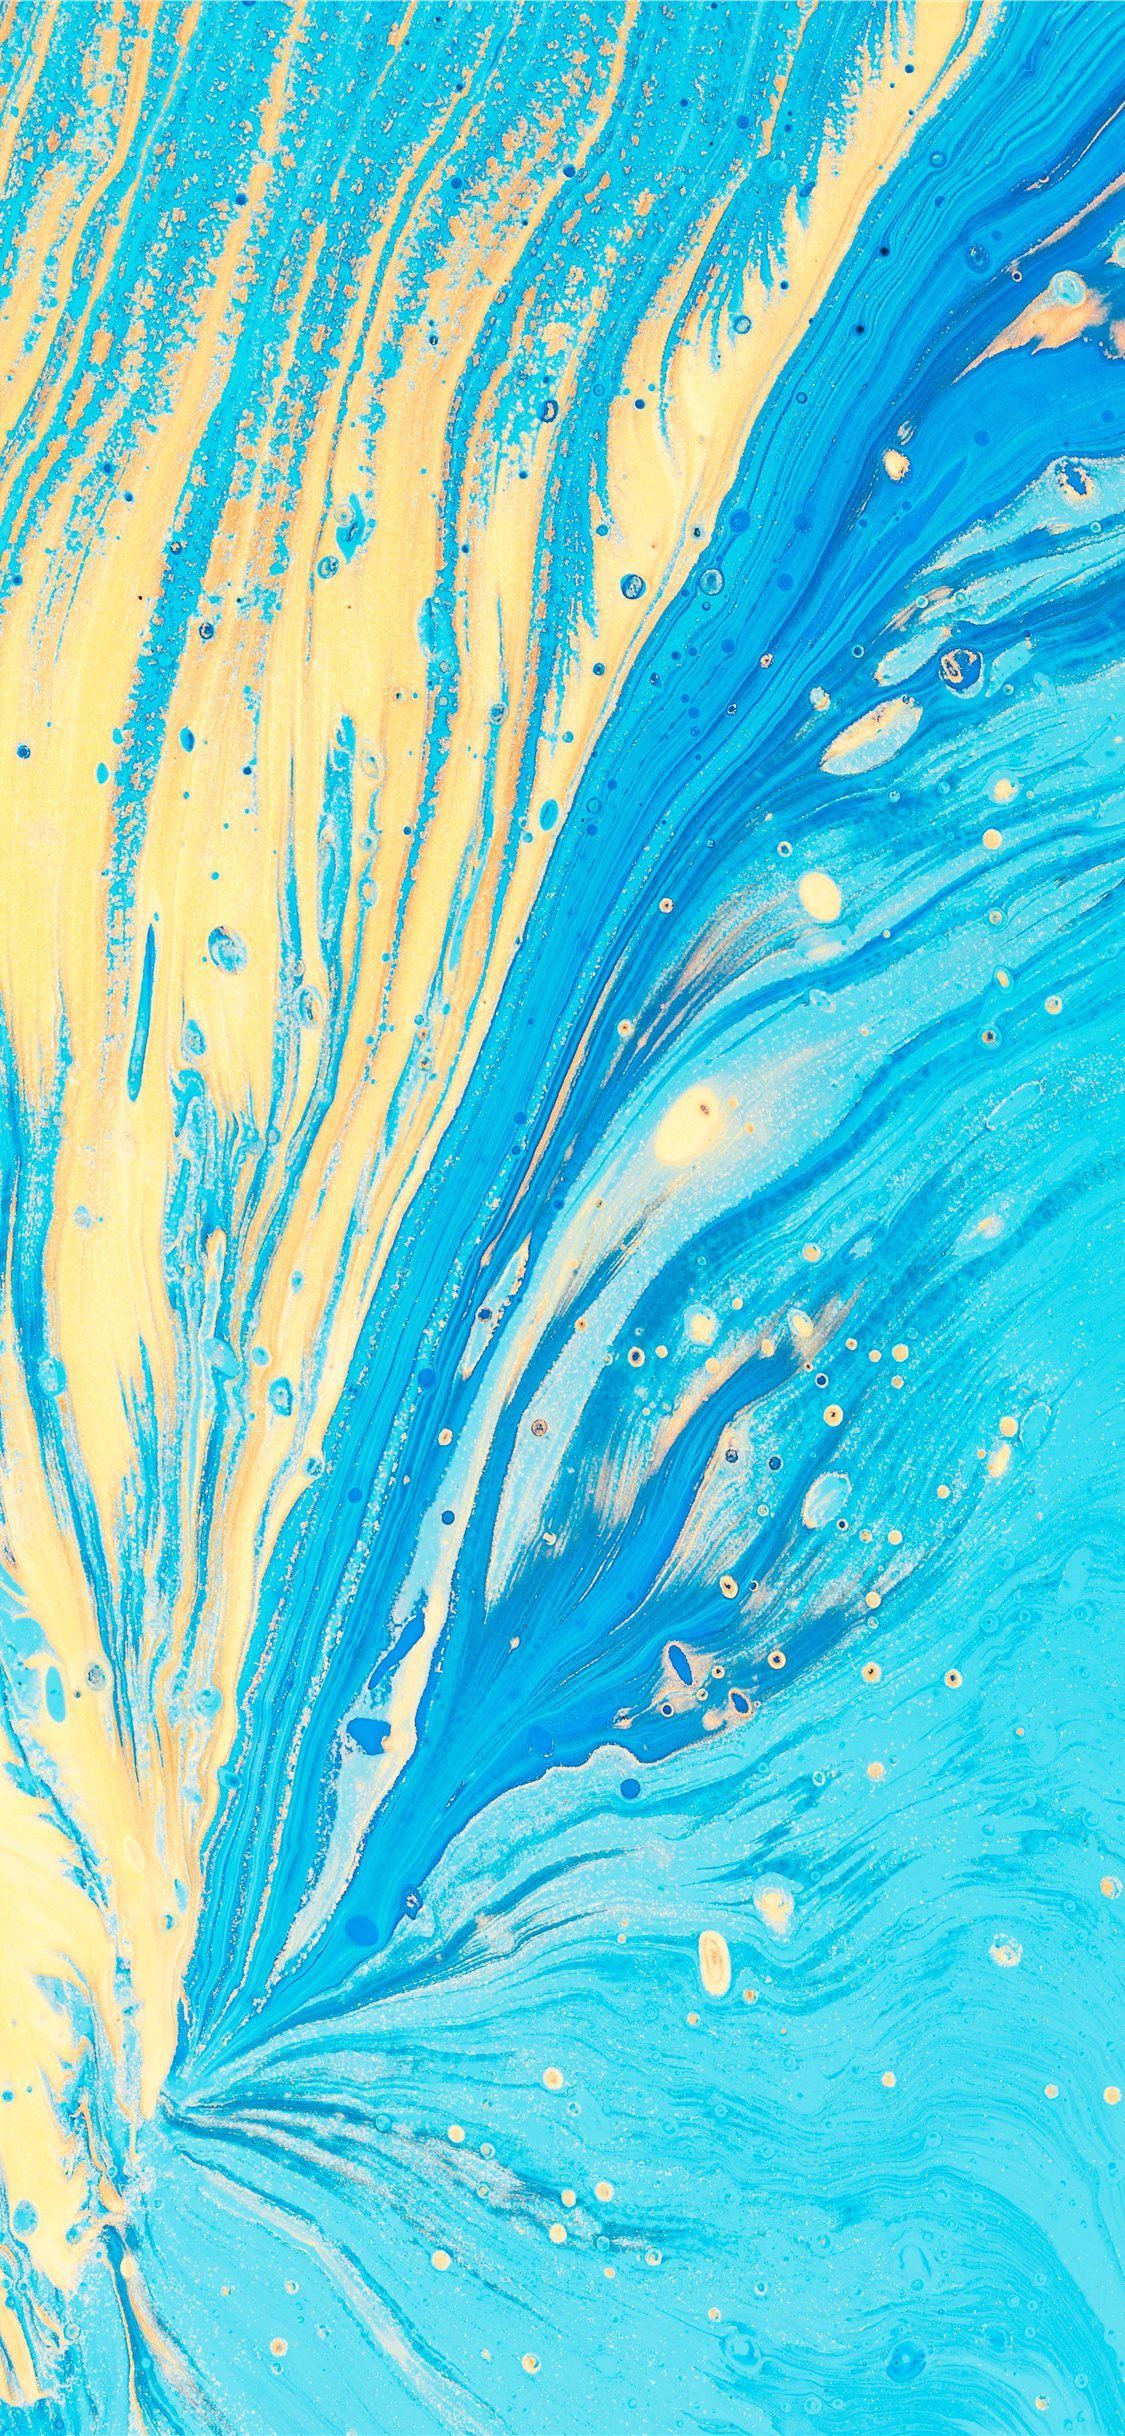 blue and yellow abstract artwork iPhone X Wallpaper. HD ipad wallpaper, Ocean texture, Blue art prints